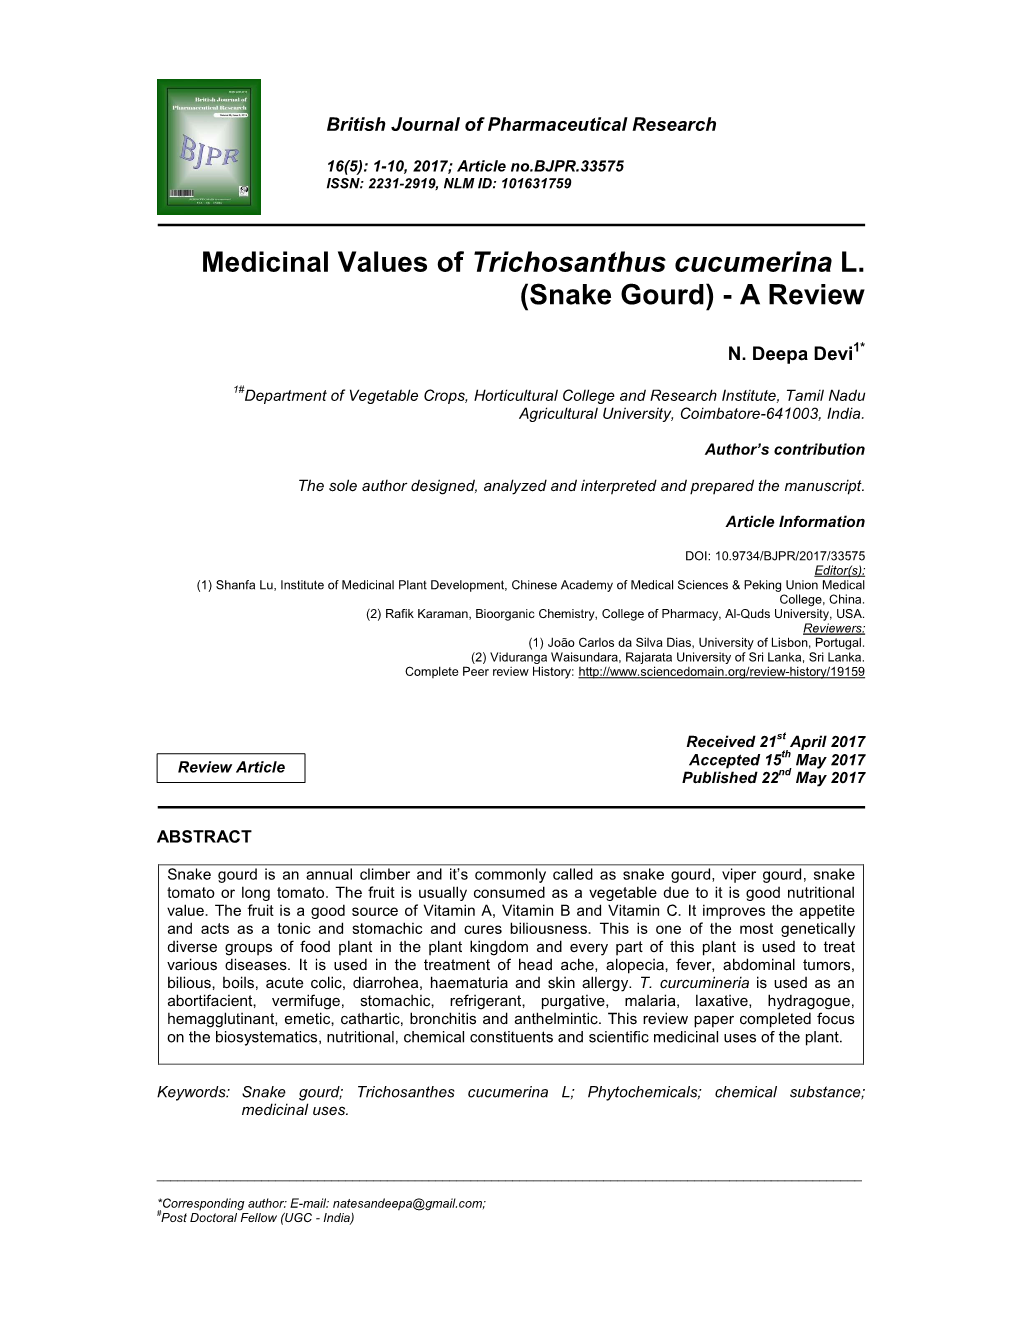 Medicinal Values of Trichosanthus Cucumerina L. (Snake Gourd) - a Review